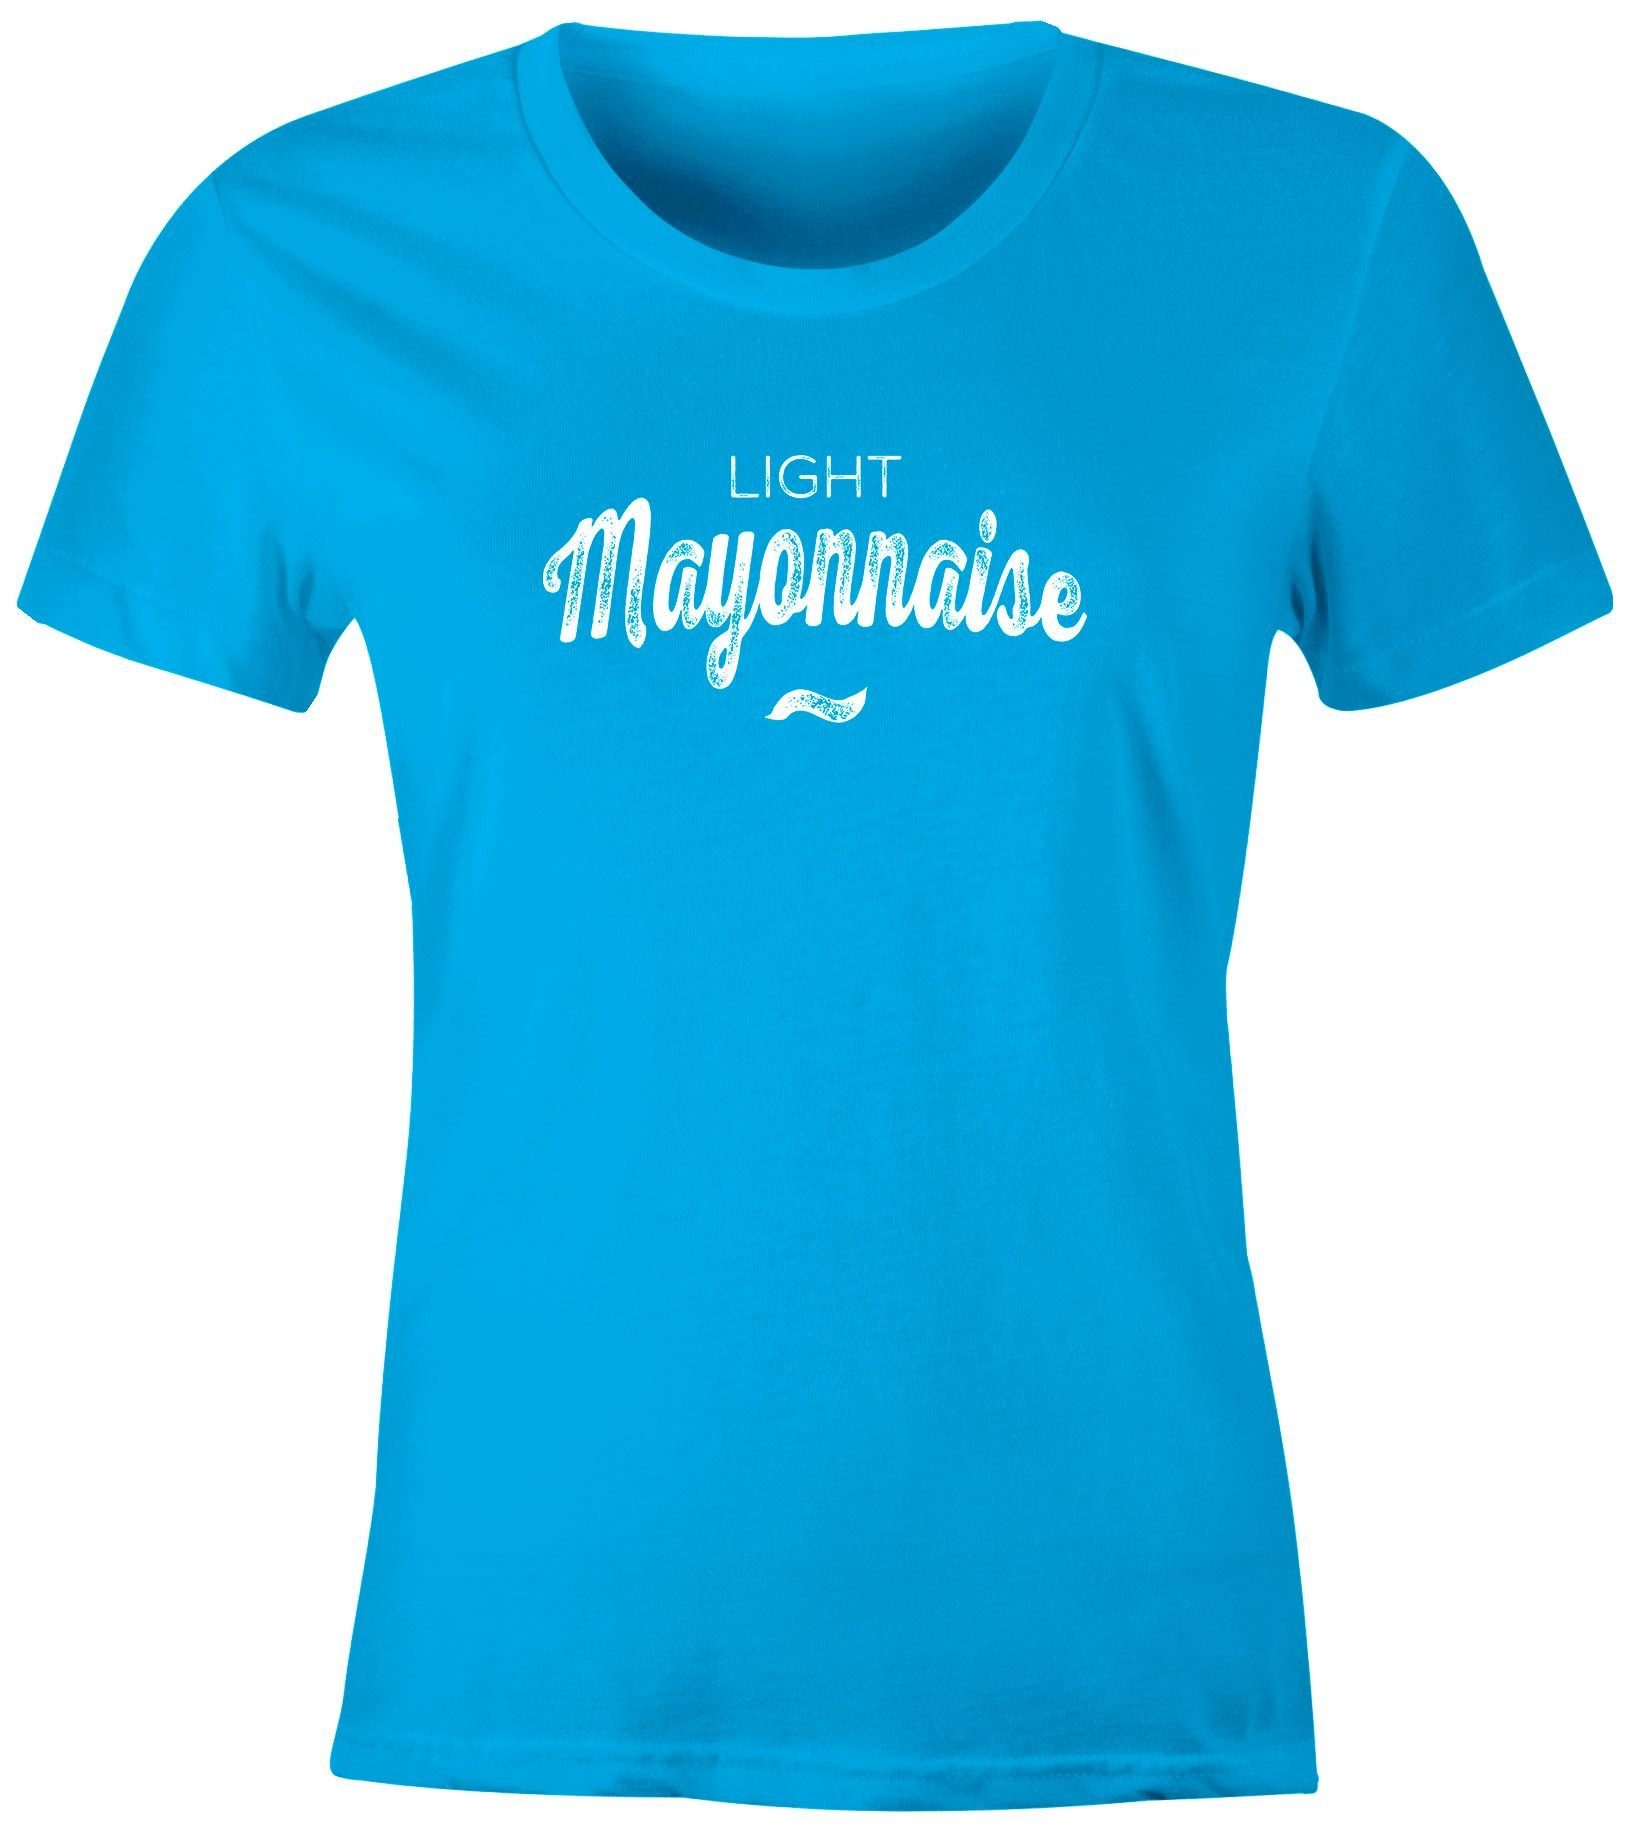 MoonWorks Print-Shirt »Damen T-Shirt Light Mayonnaise Fasching Karneval  Kostüm-Shirt Fun-Shirt Moonworks®« mit Print online kaufen | OTTO